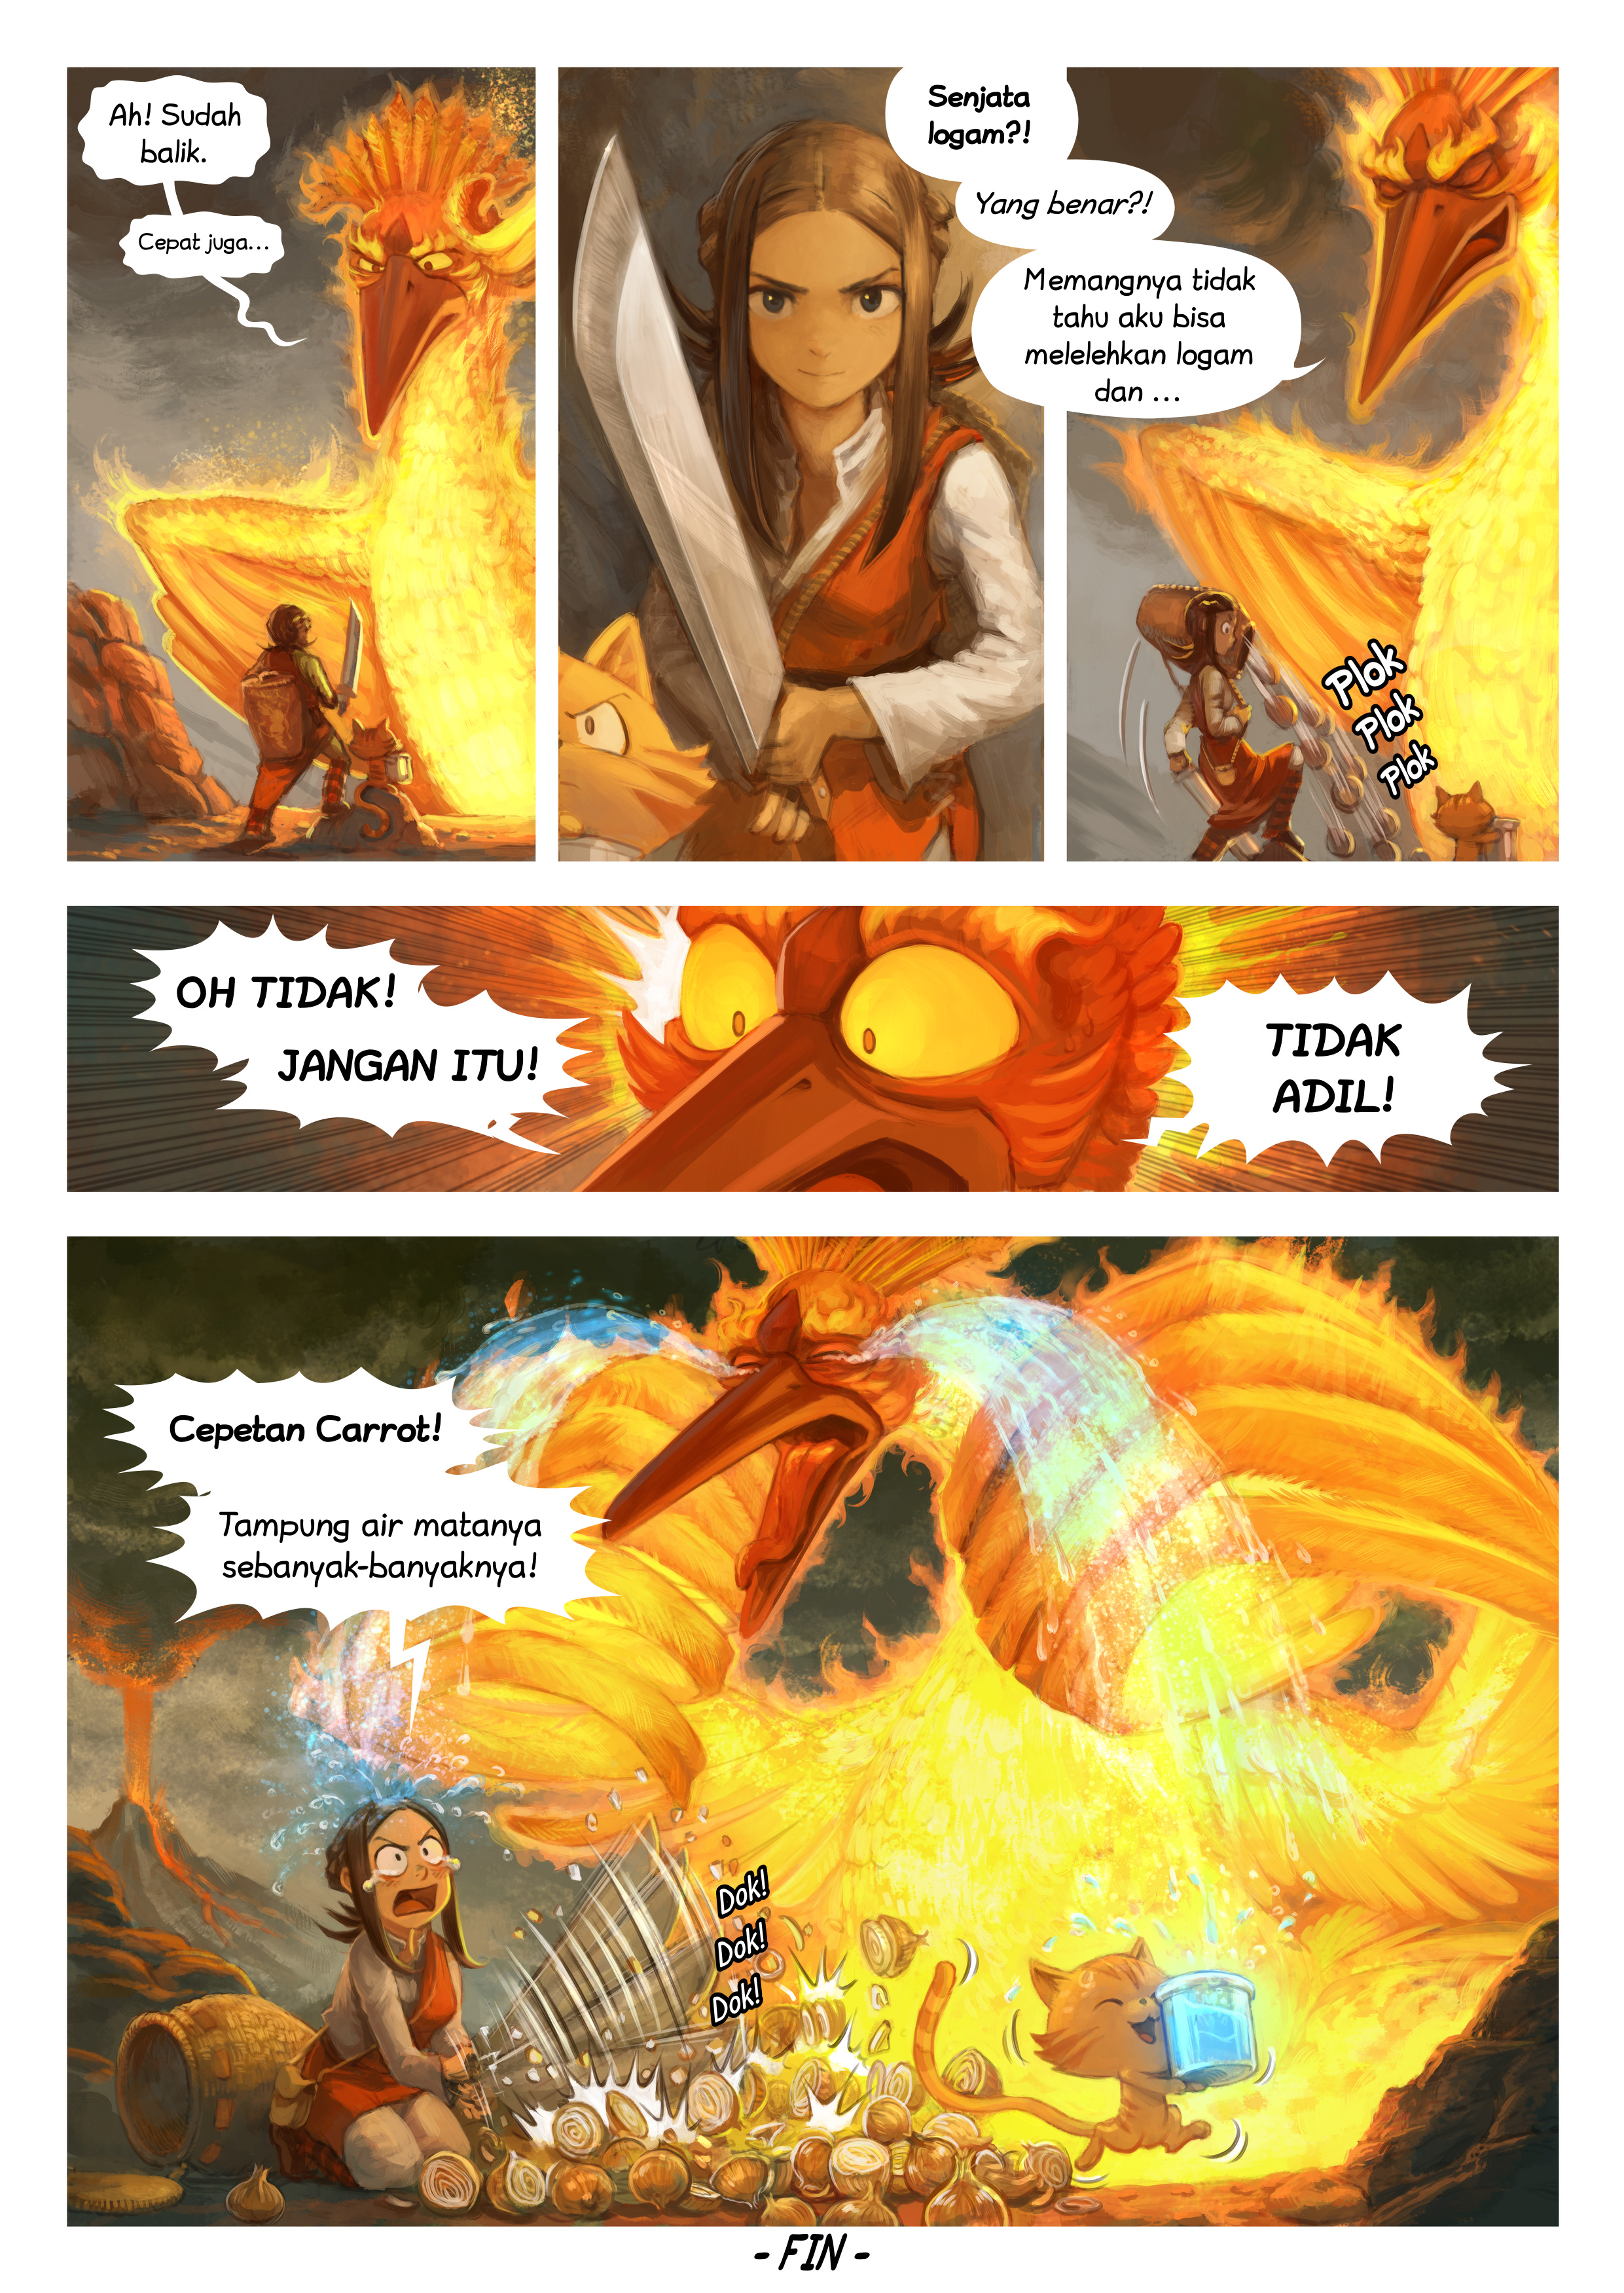 Episode 37: Air Mata Phoenix, Page 8